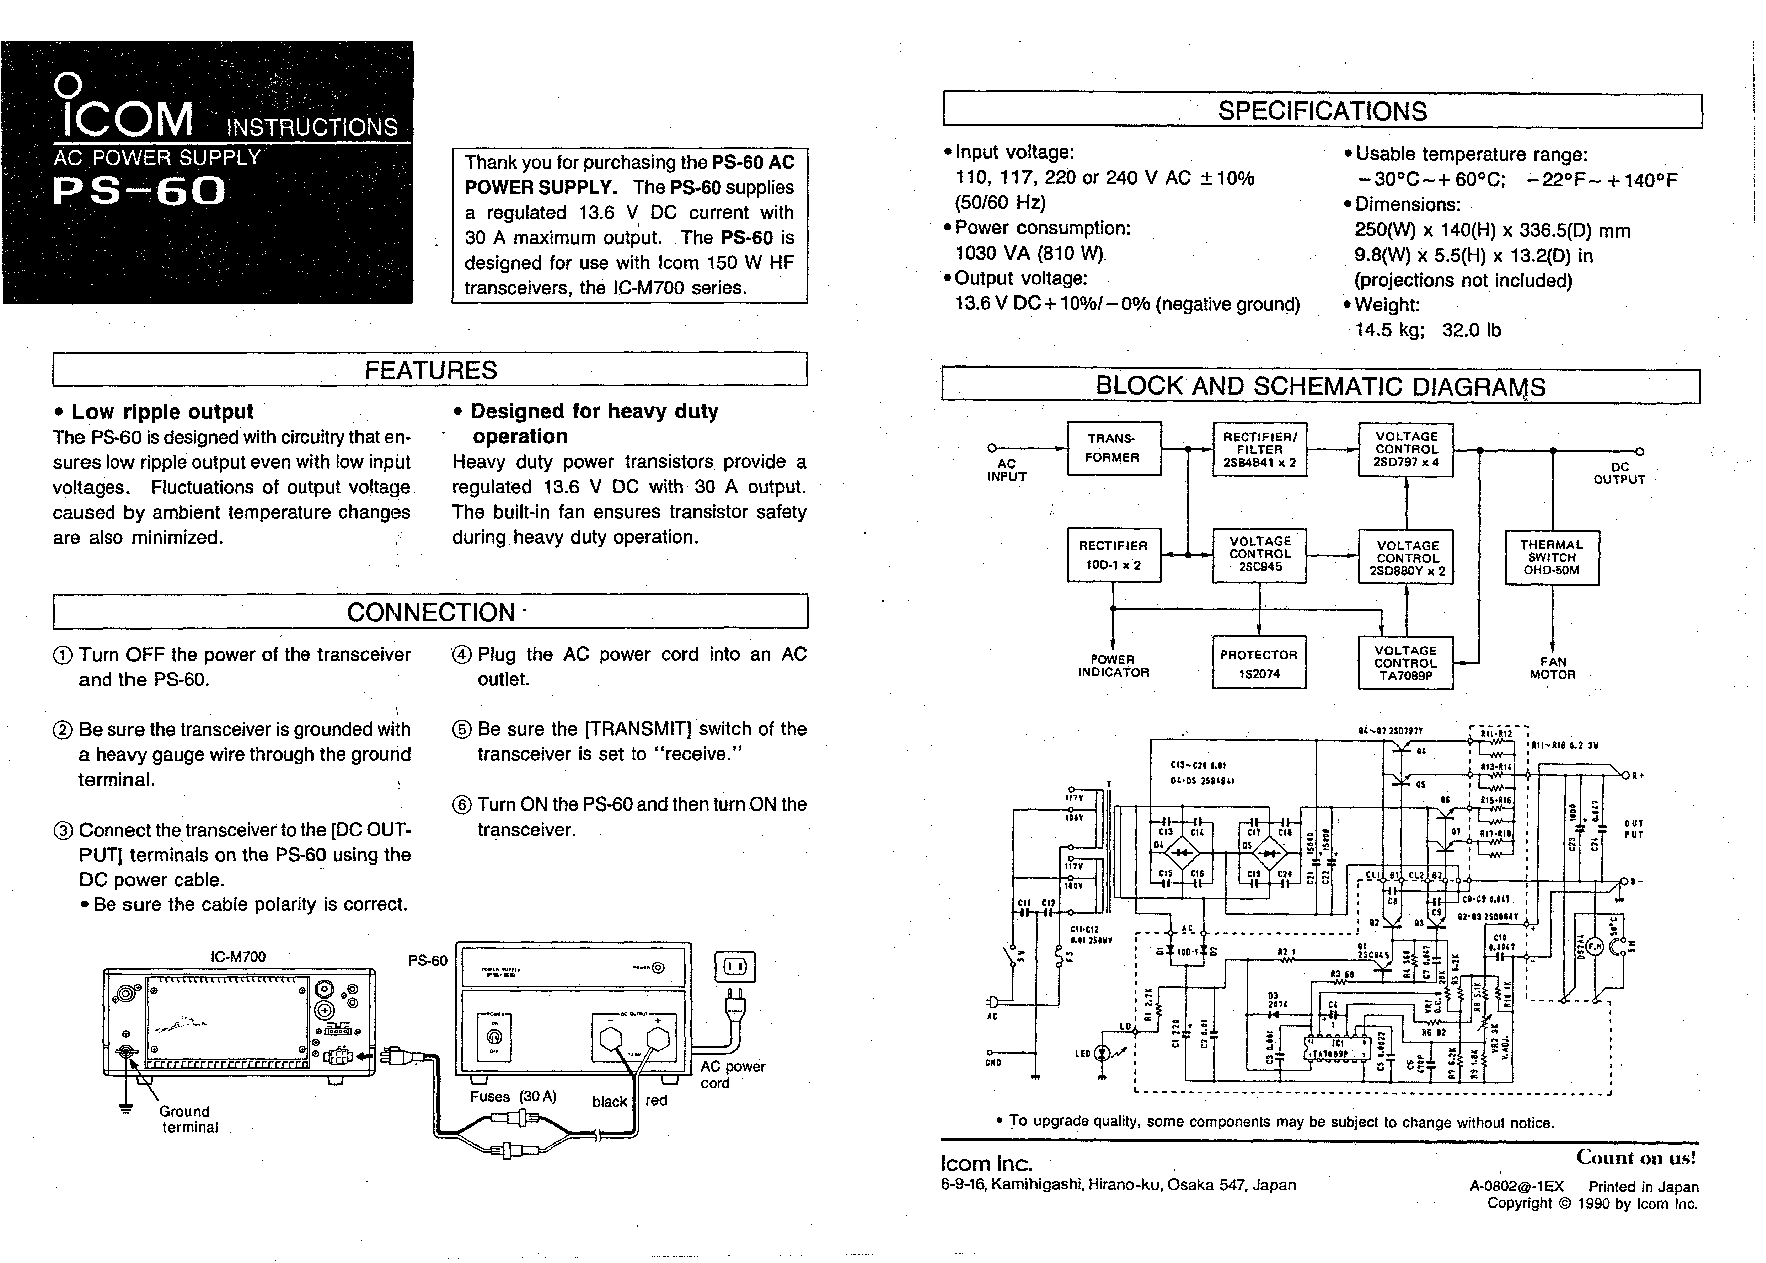 Icom PS-60 User Manual